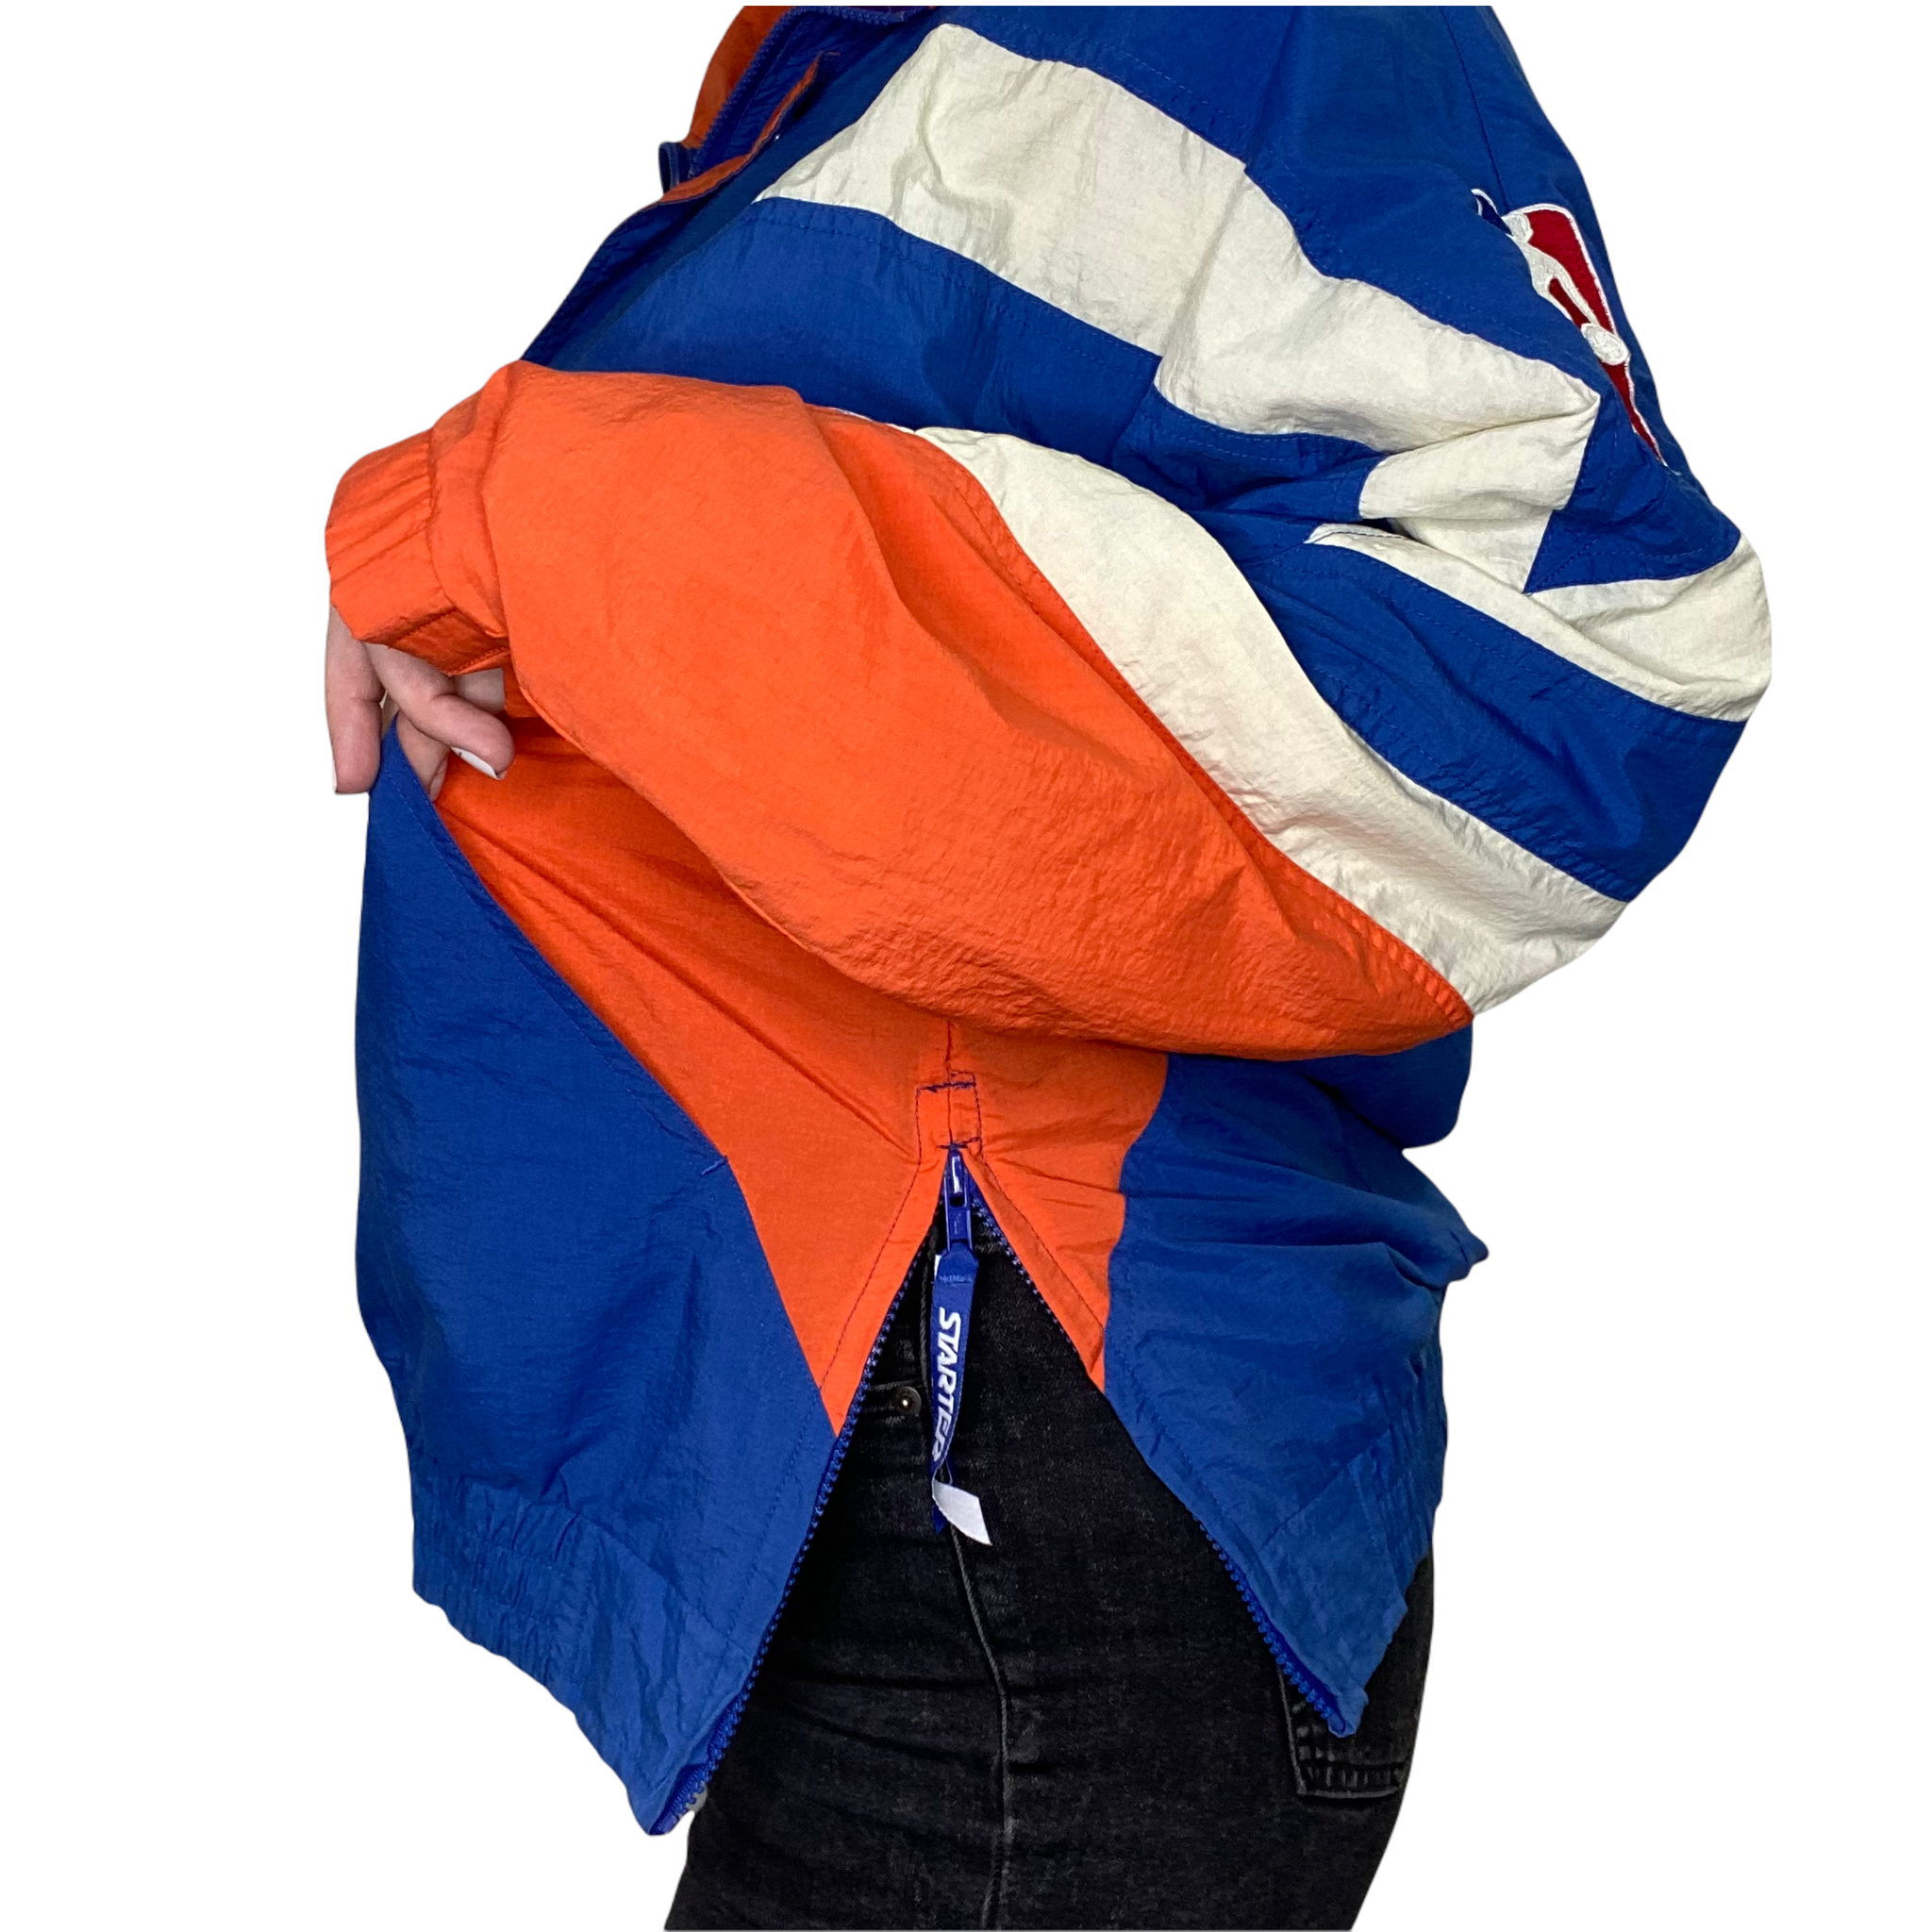 Vintage 1990s New York NY Knicks Kangaroo Pullover Puffer Jacket from Logo 7 - L